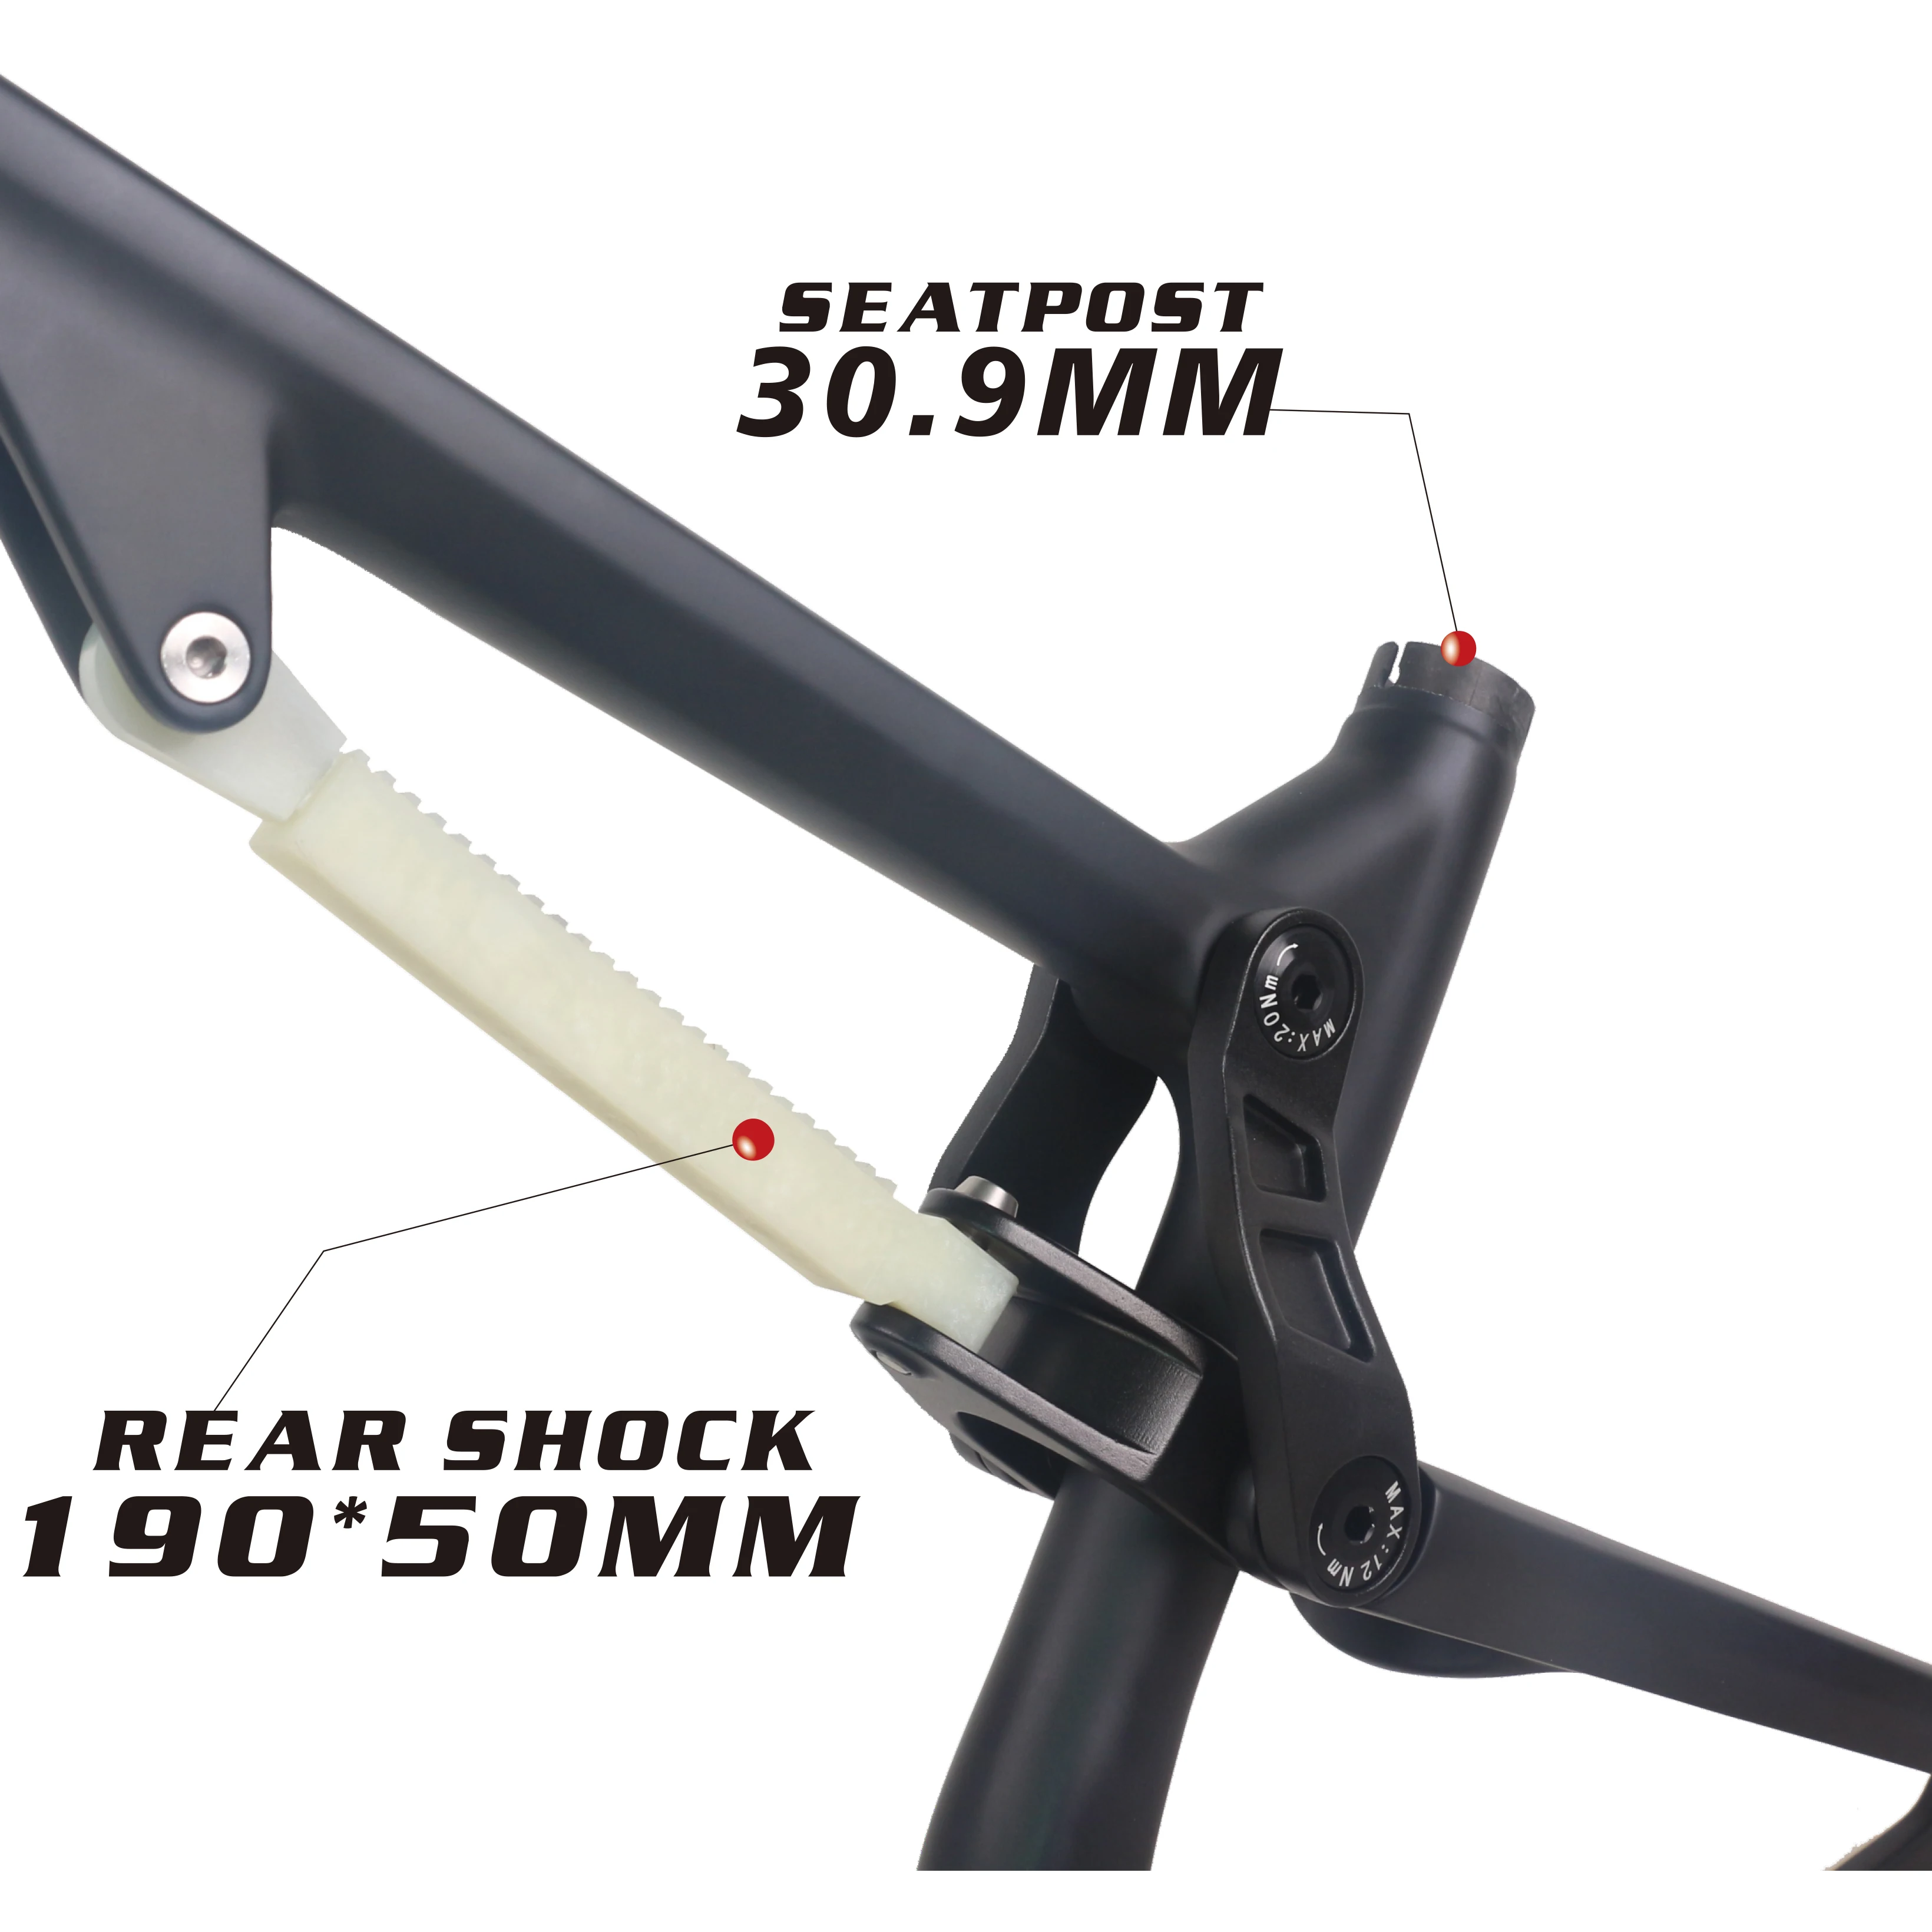 NEW 29er frame Full Suspension MTB Bicycle Carbon frame suspension boosts 148*12mm XC travel rear/front 120mm bike FM198